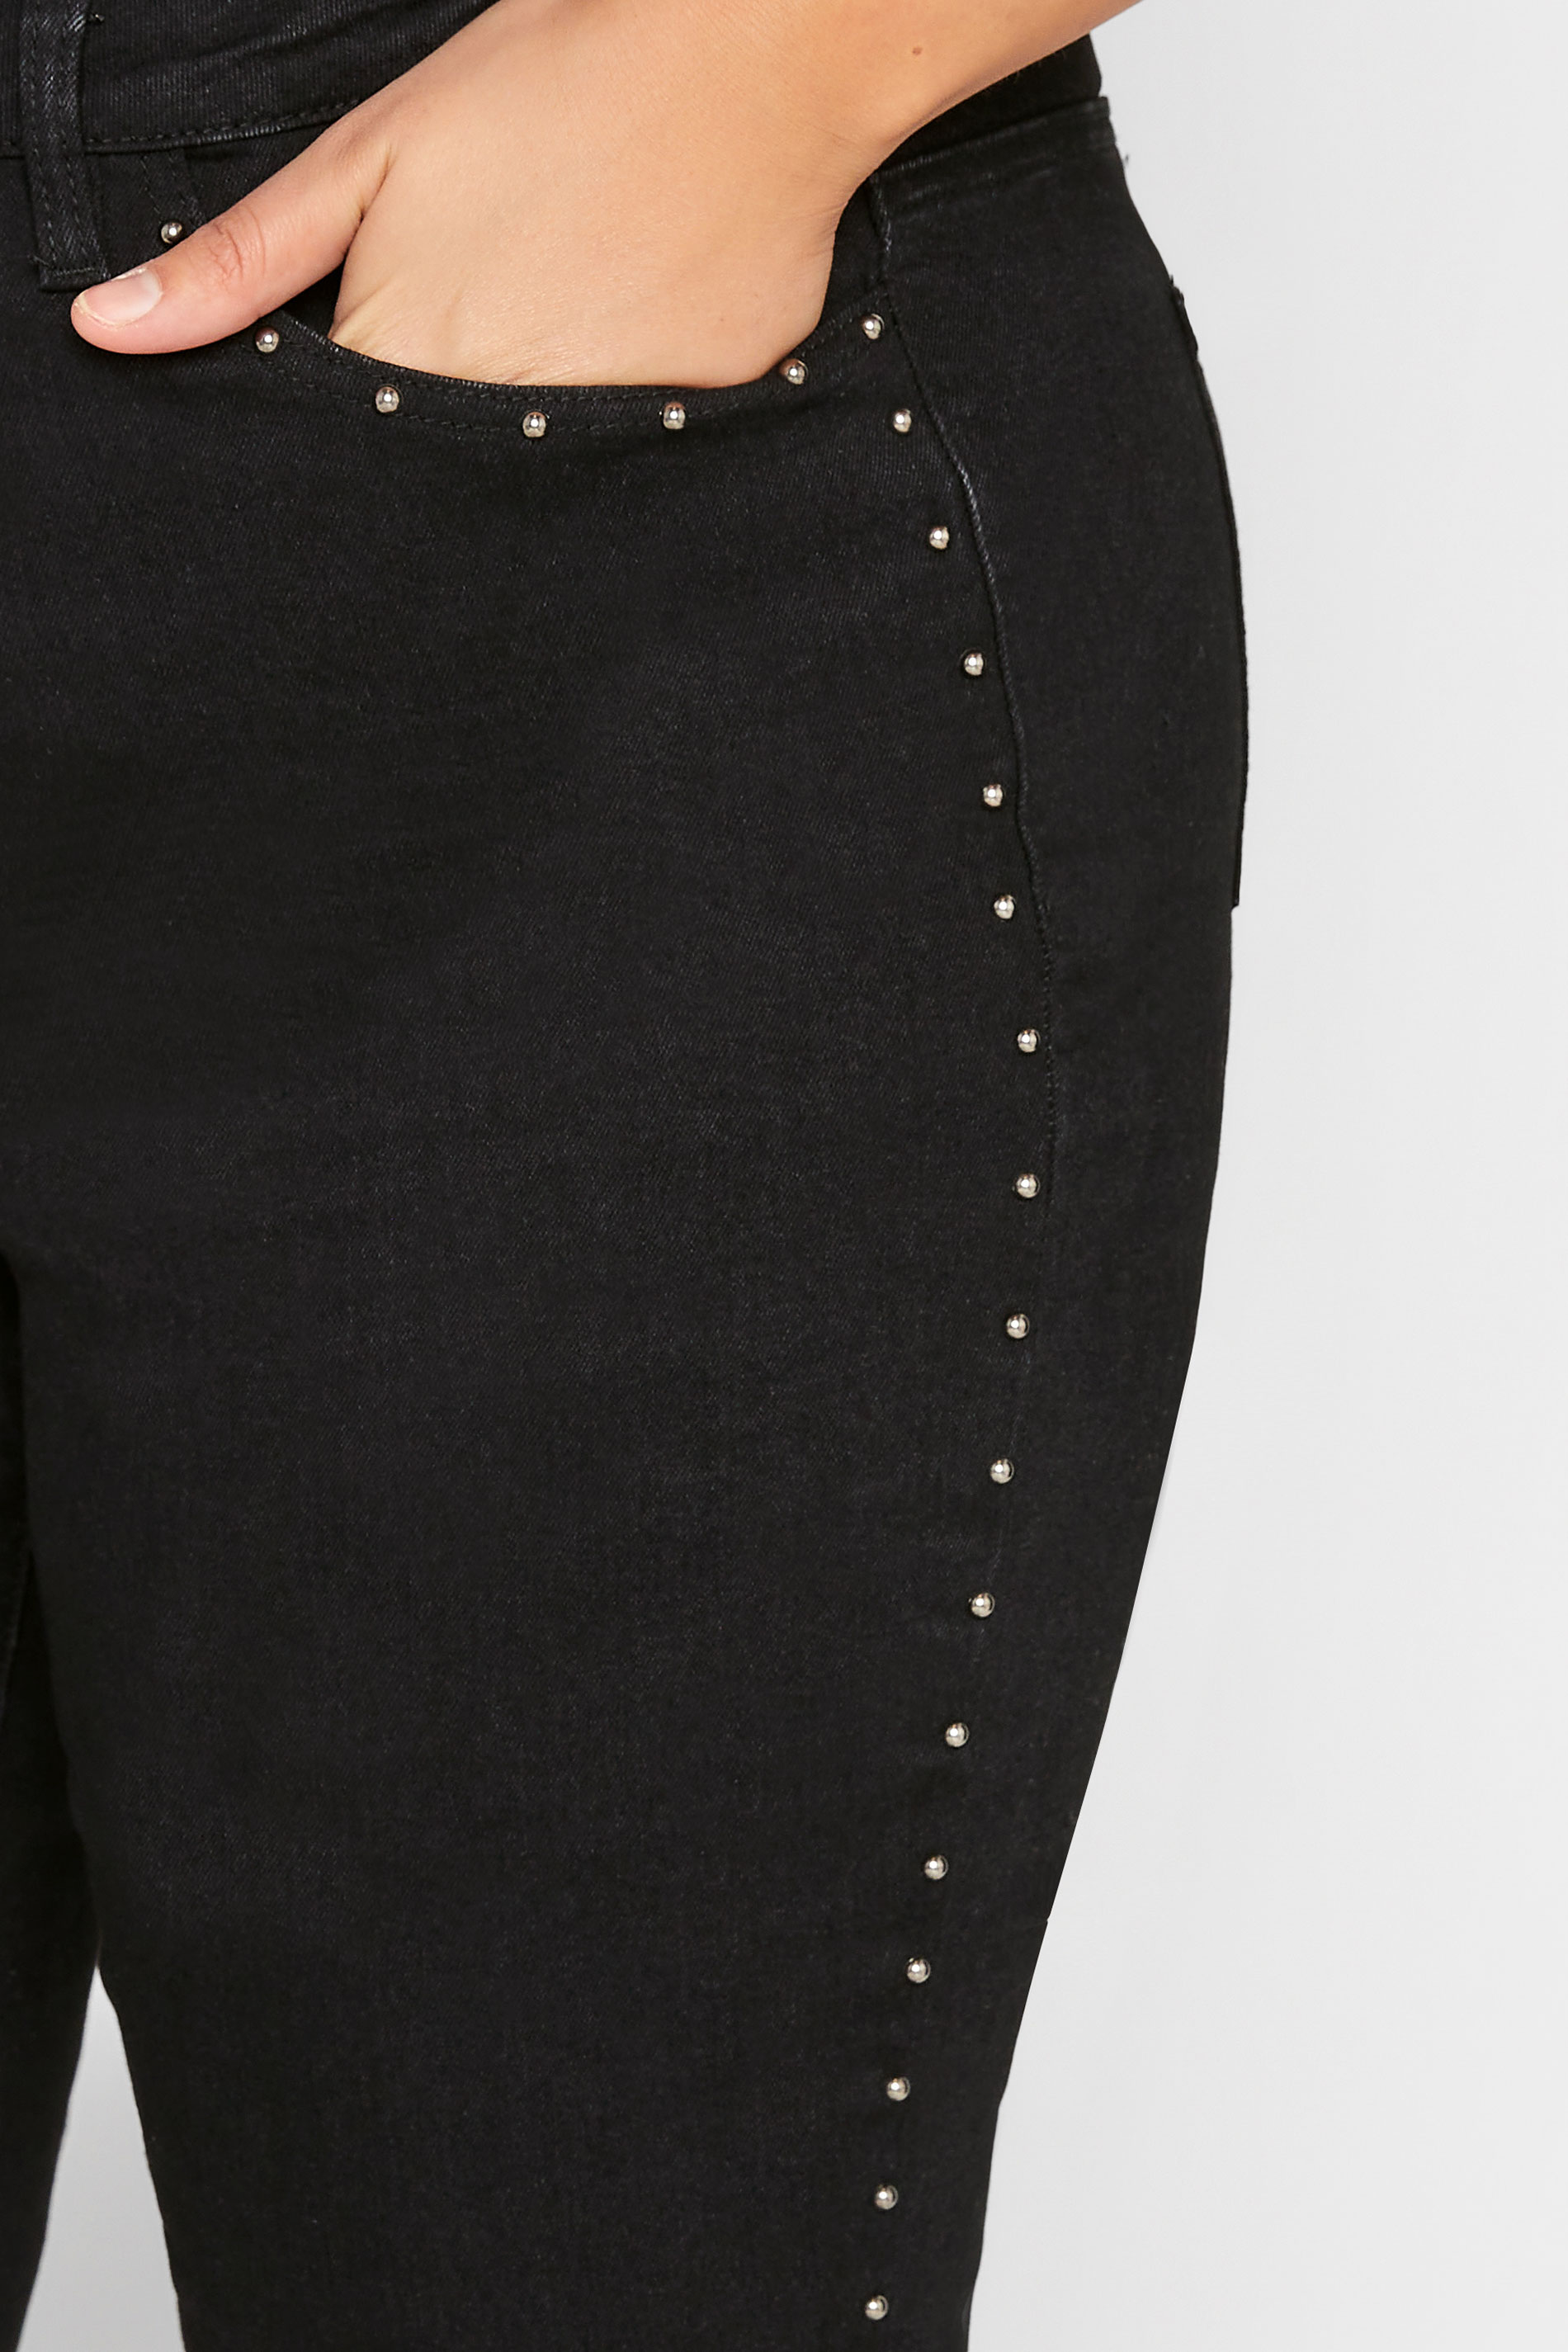 LTS Tall Women's Black Studded AVA Skinny Jeans | Long Tall Sally 2